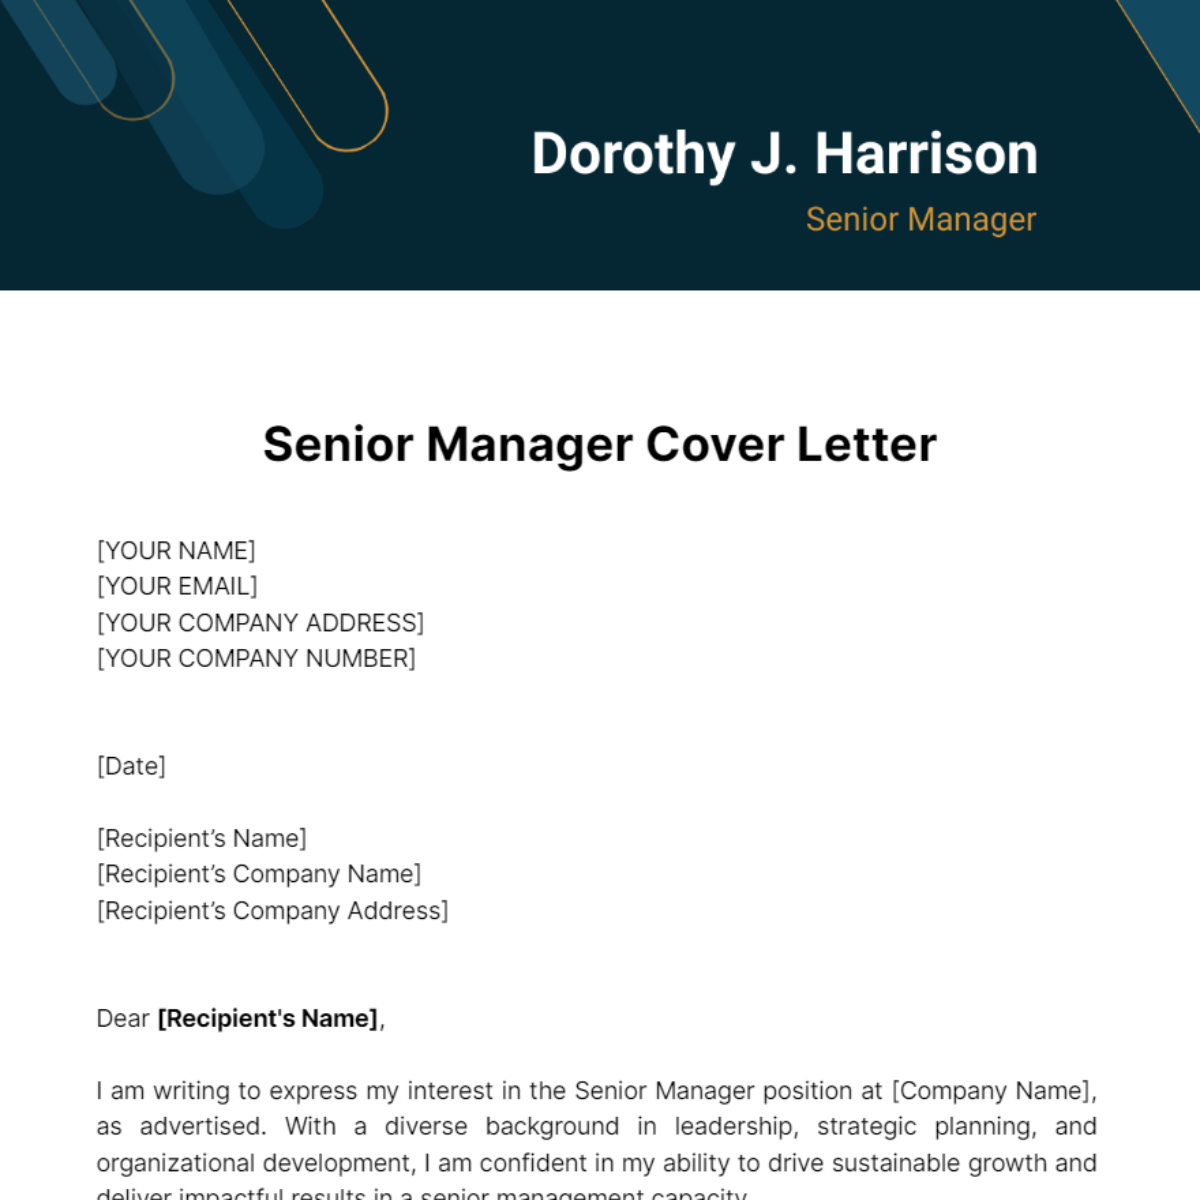 Senior Manager Cover Letter Template